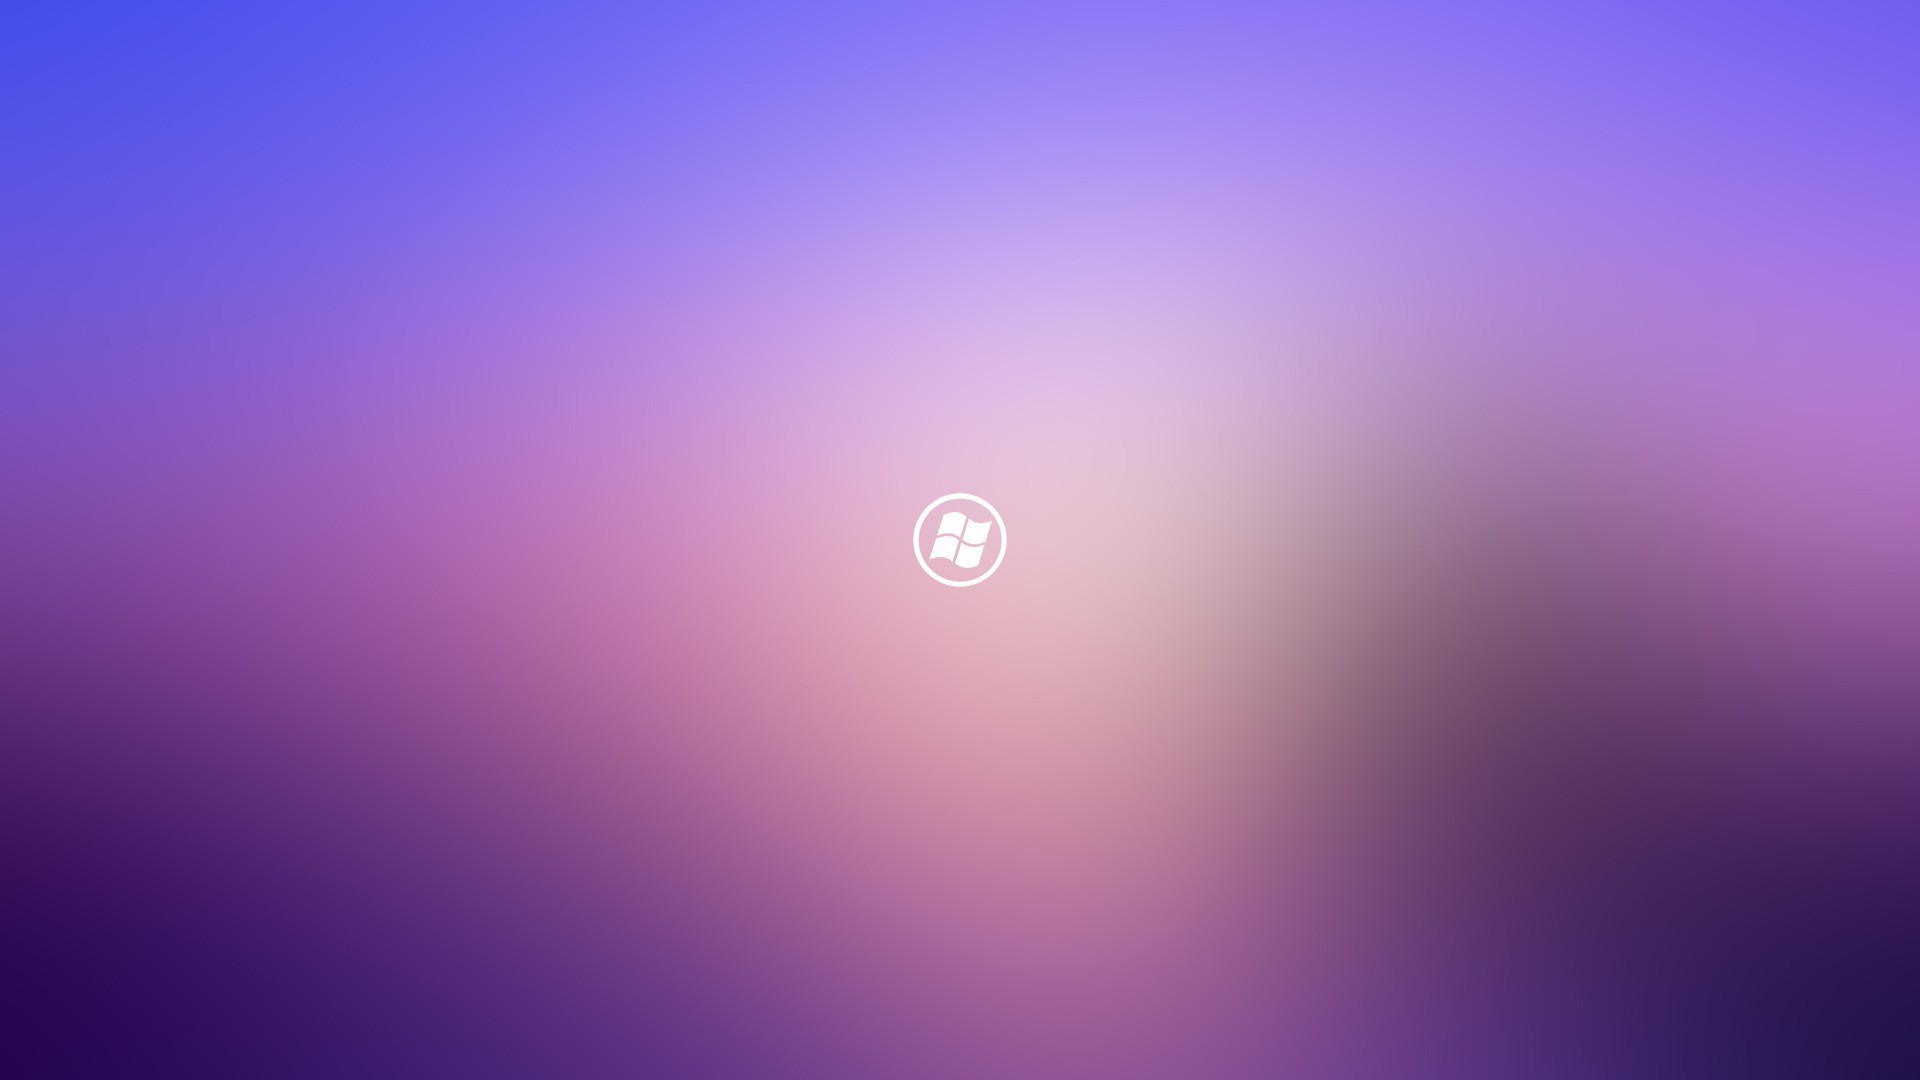 Windows Purple free background